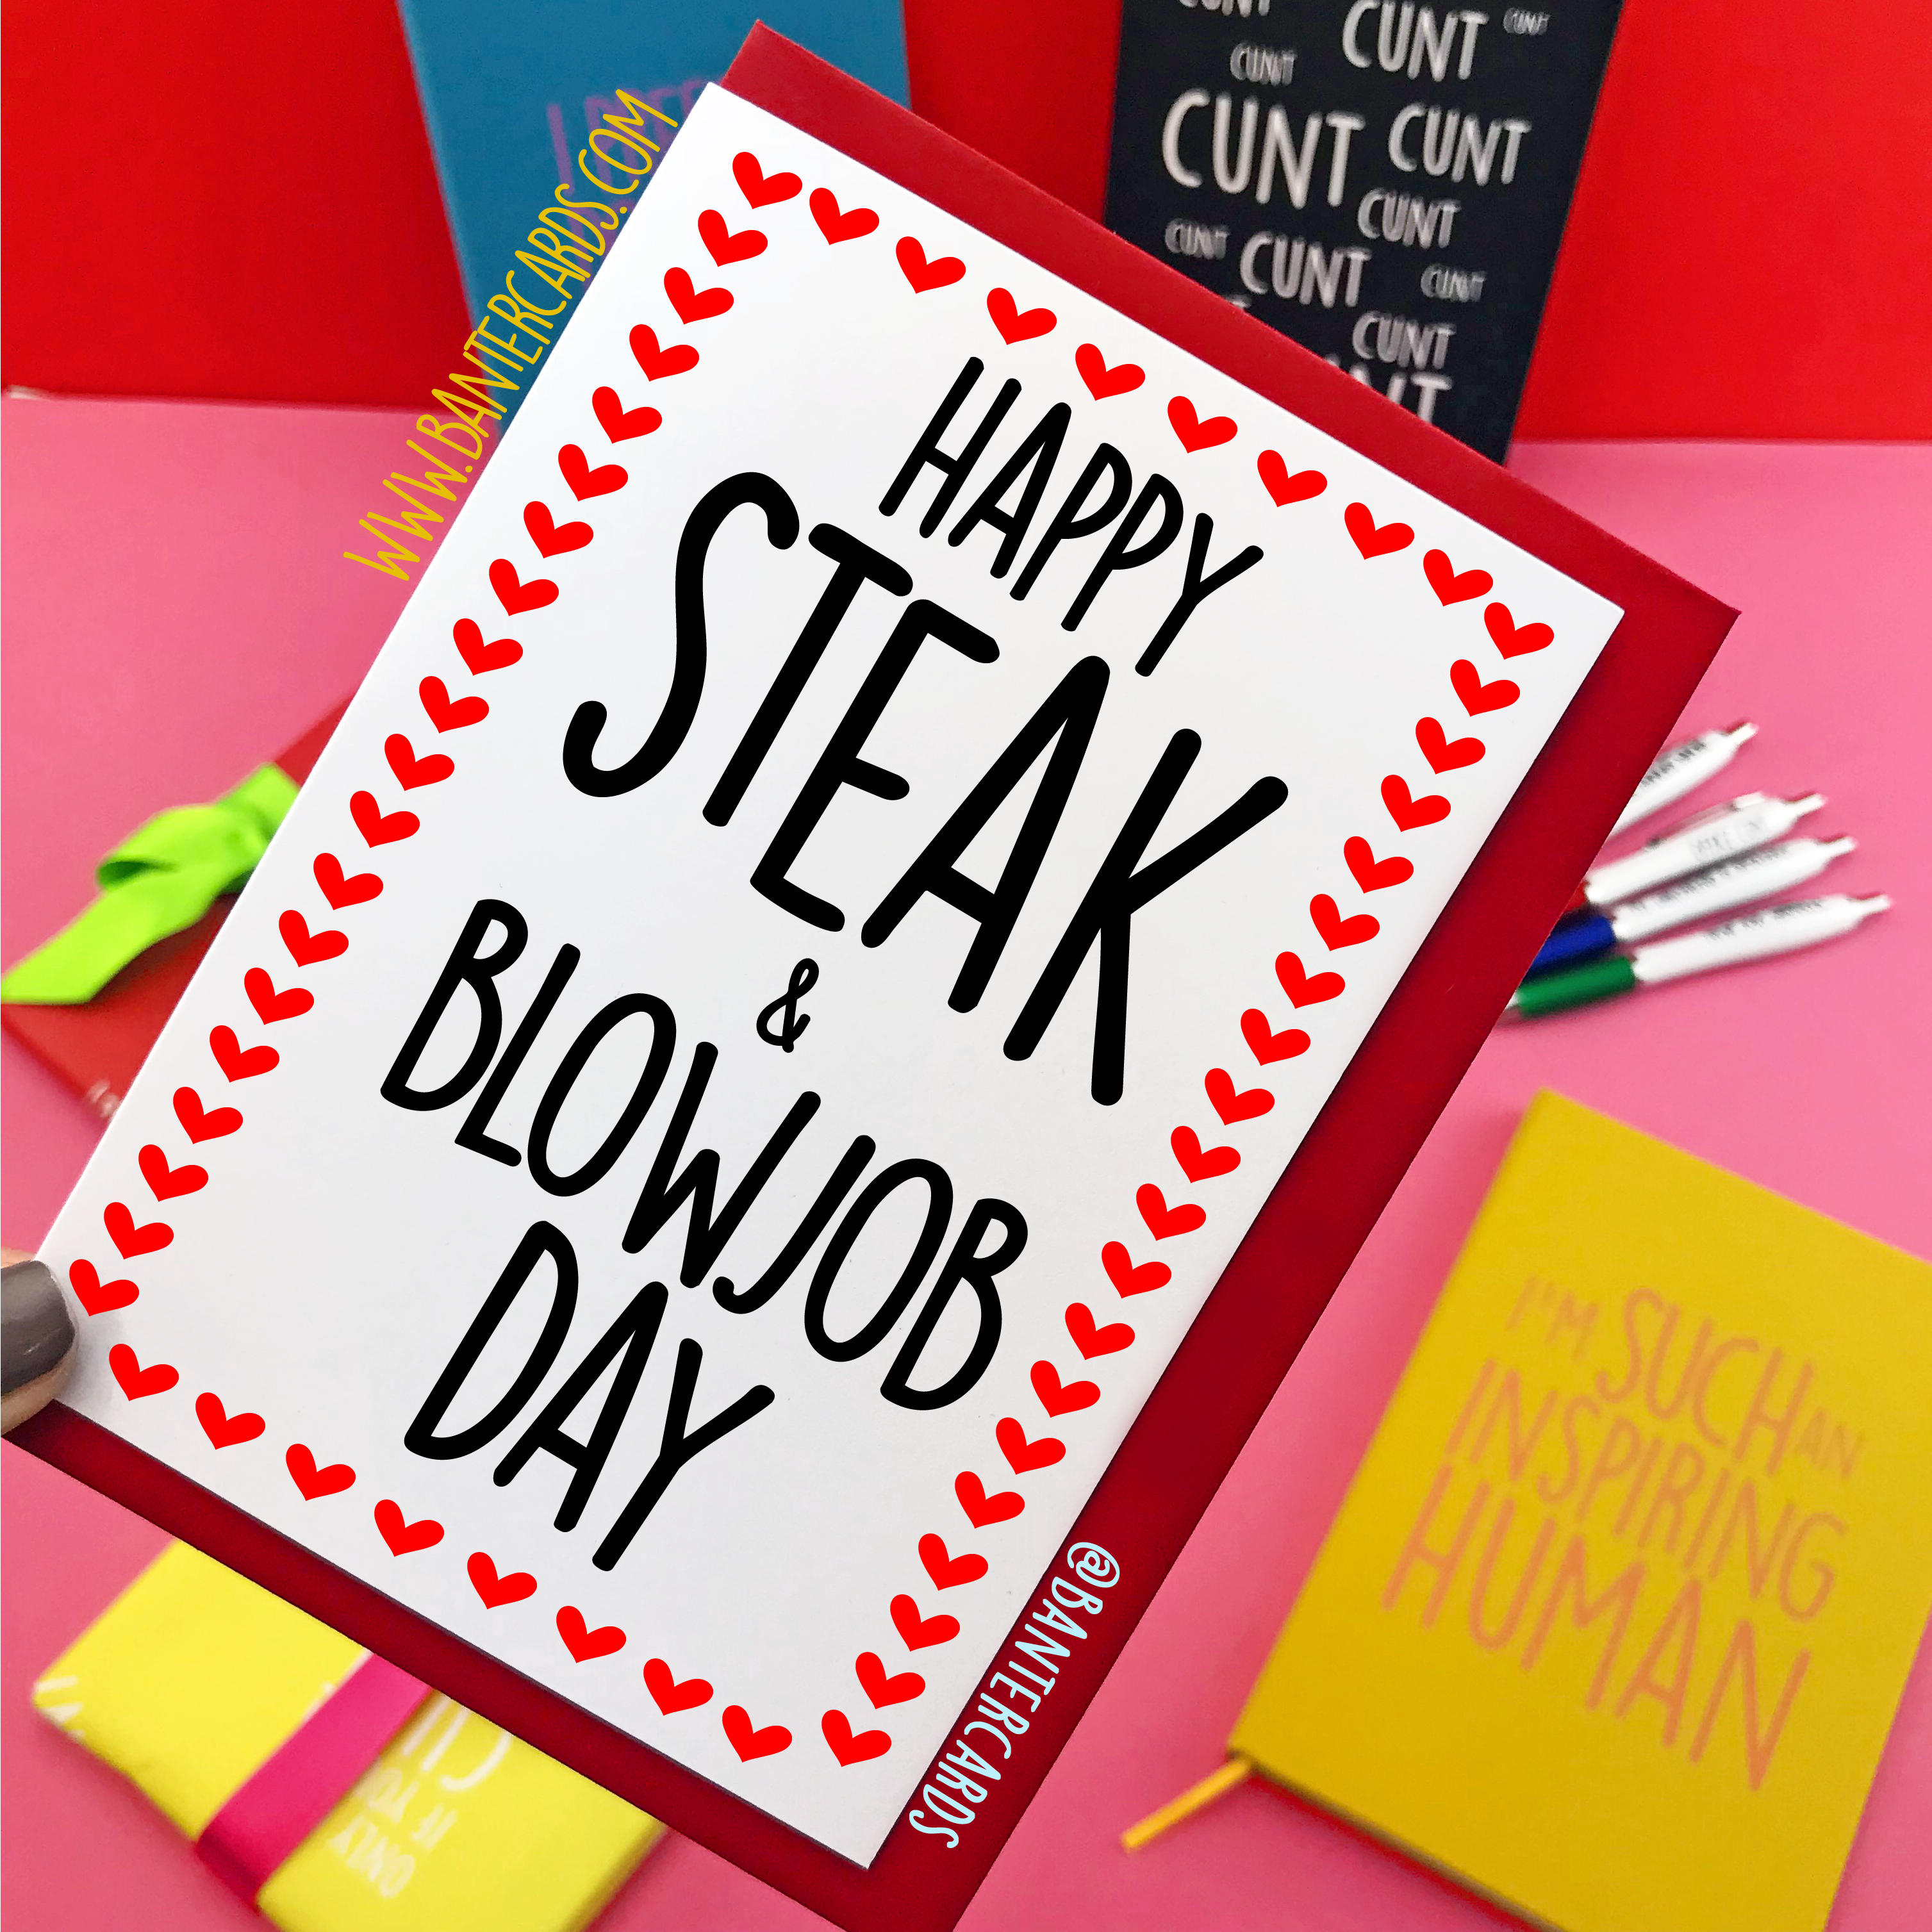 National Steak And Blow Job Day doi chong